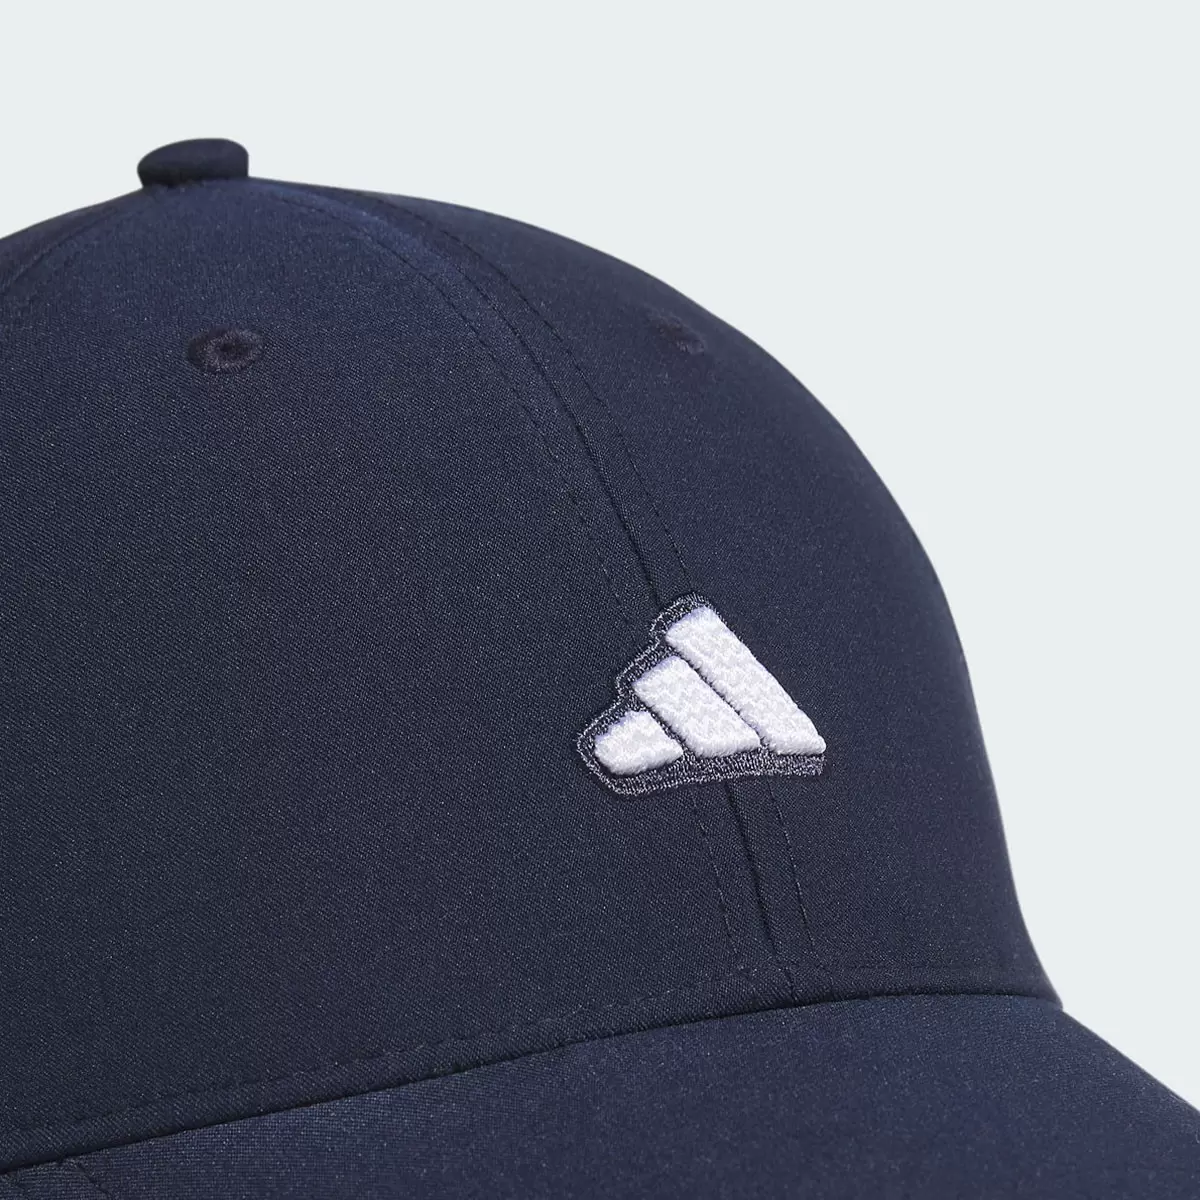 Adidas Golf 休閒帽 深藍